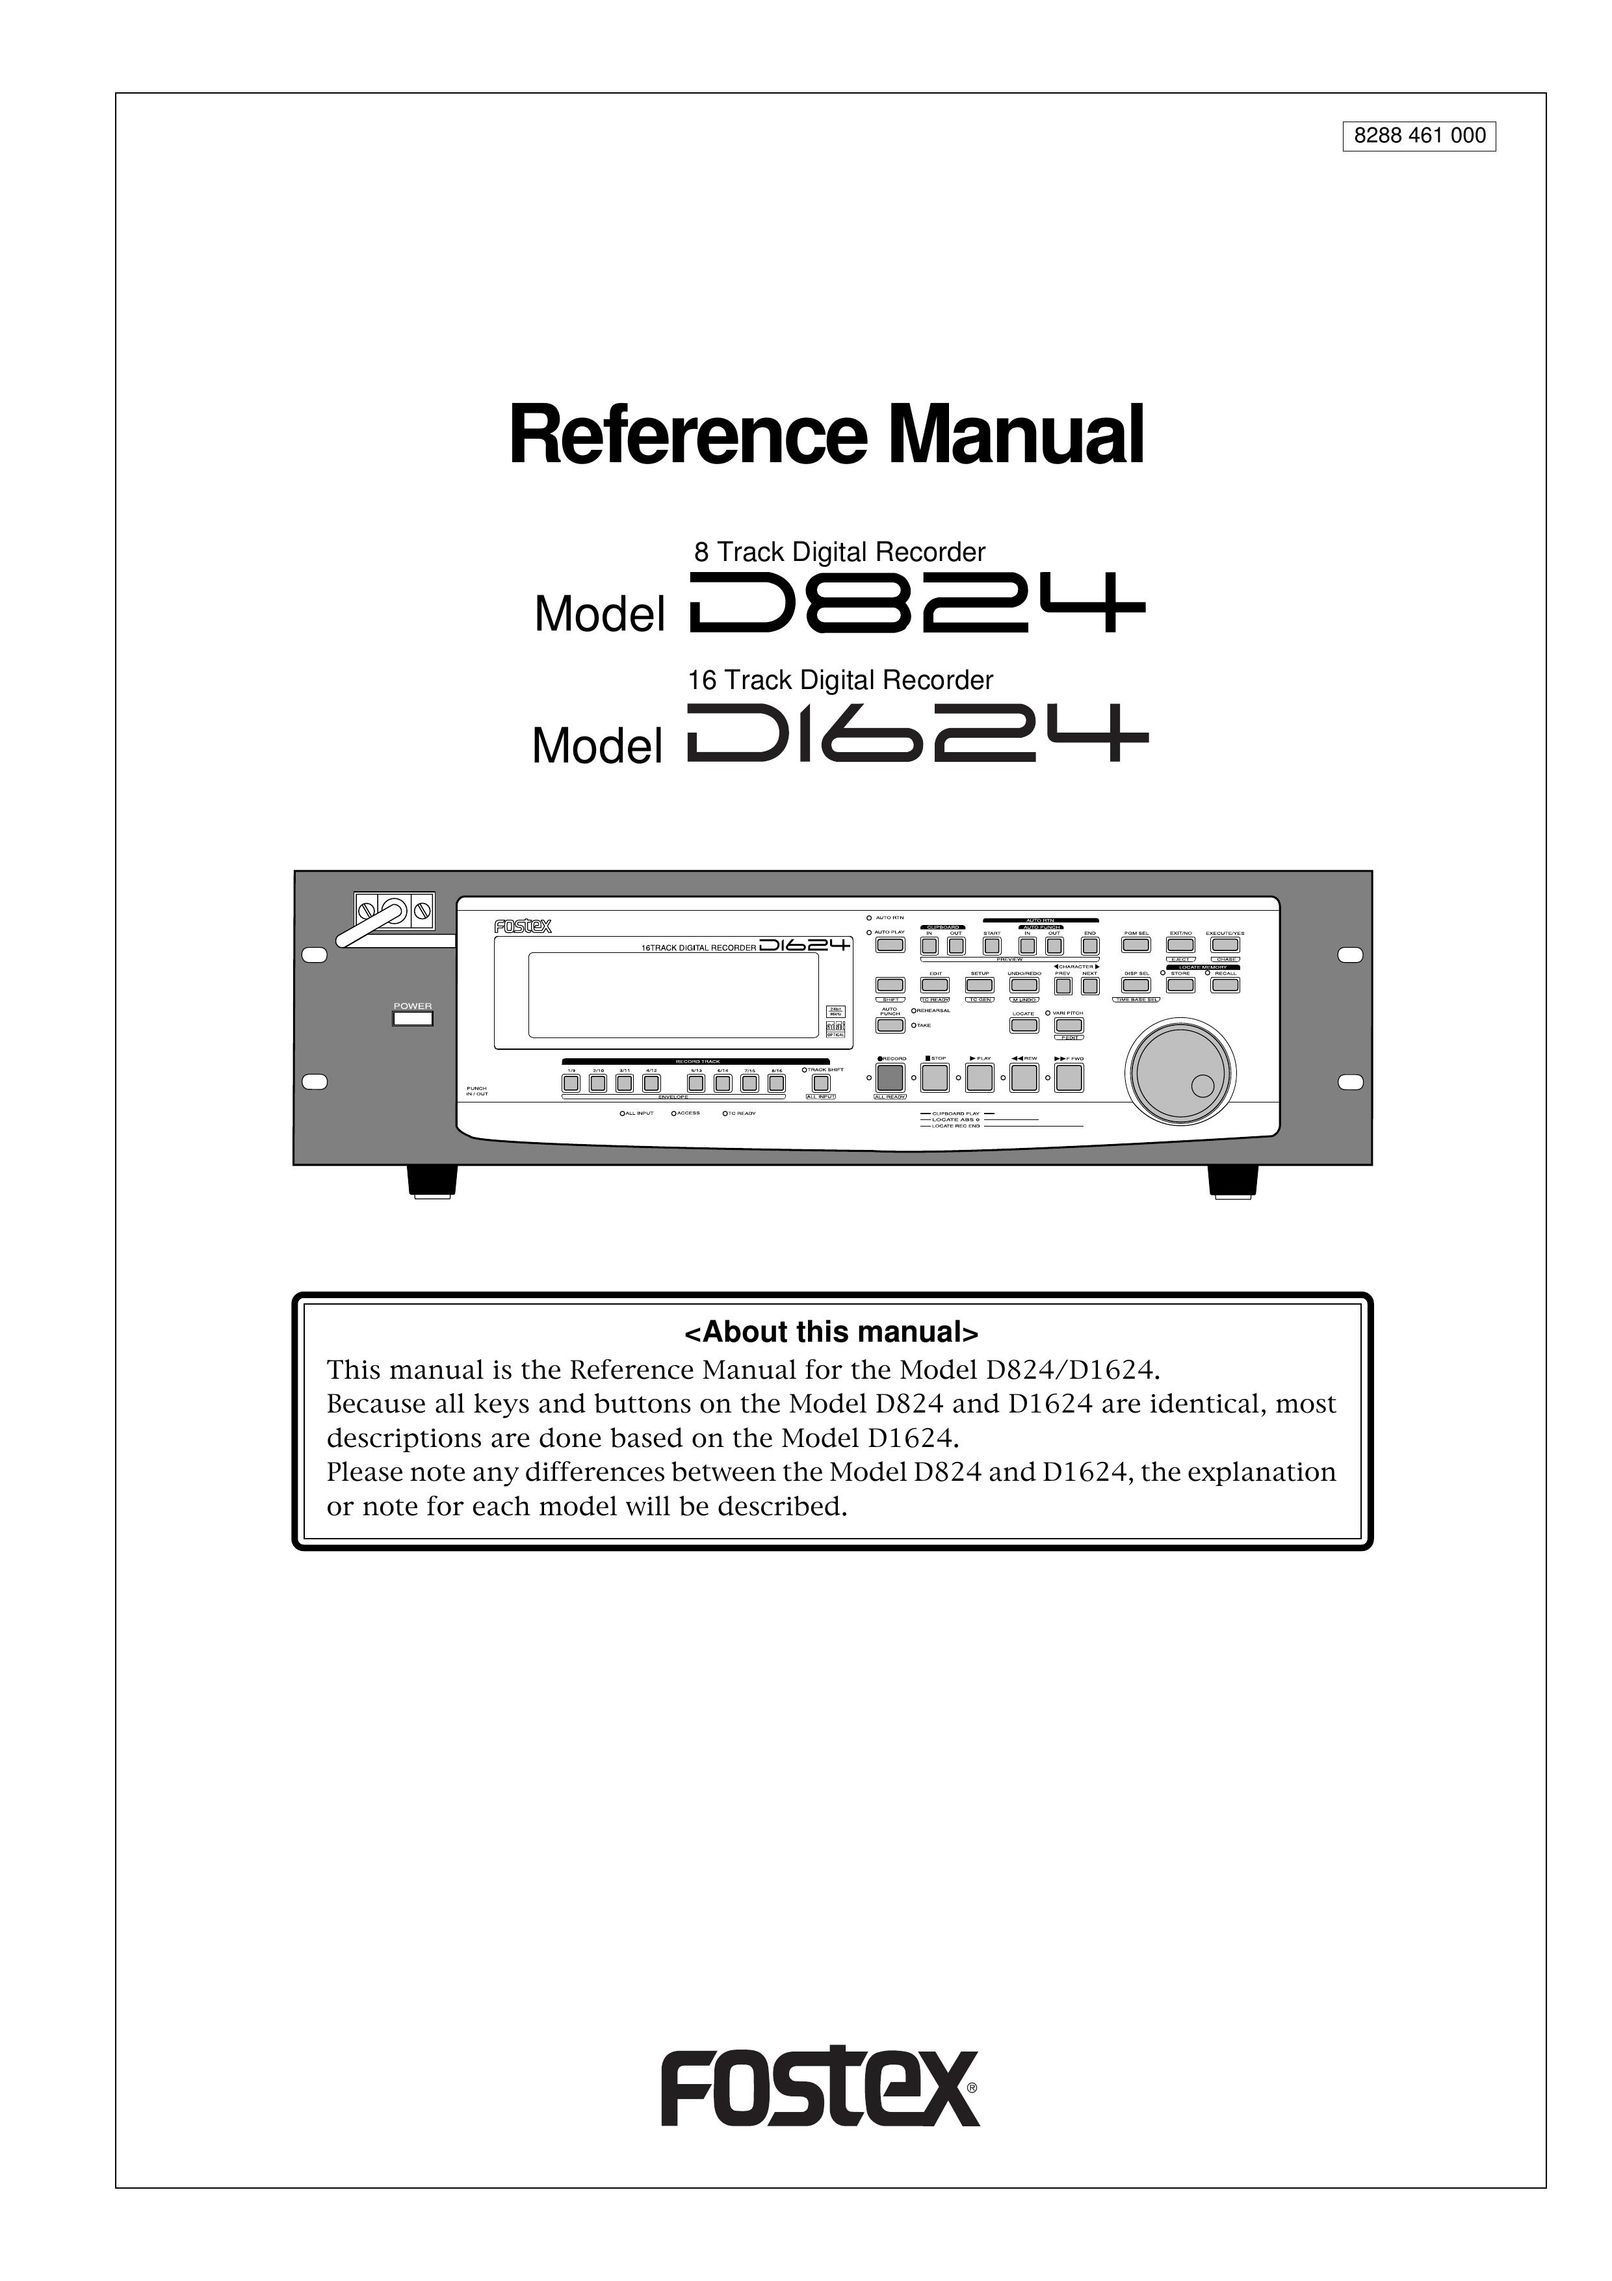 Fostex D1624 DVD Recorder User Manual